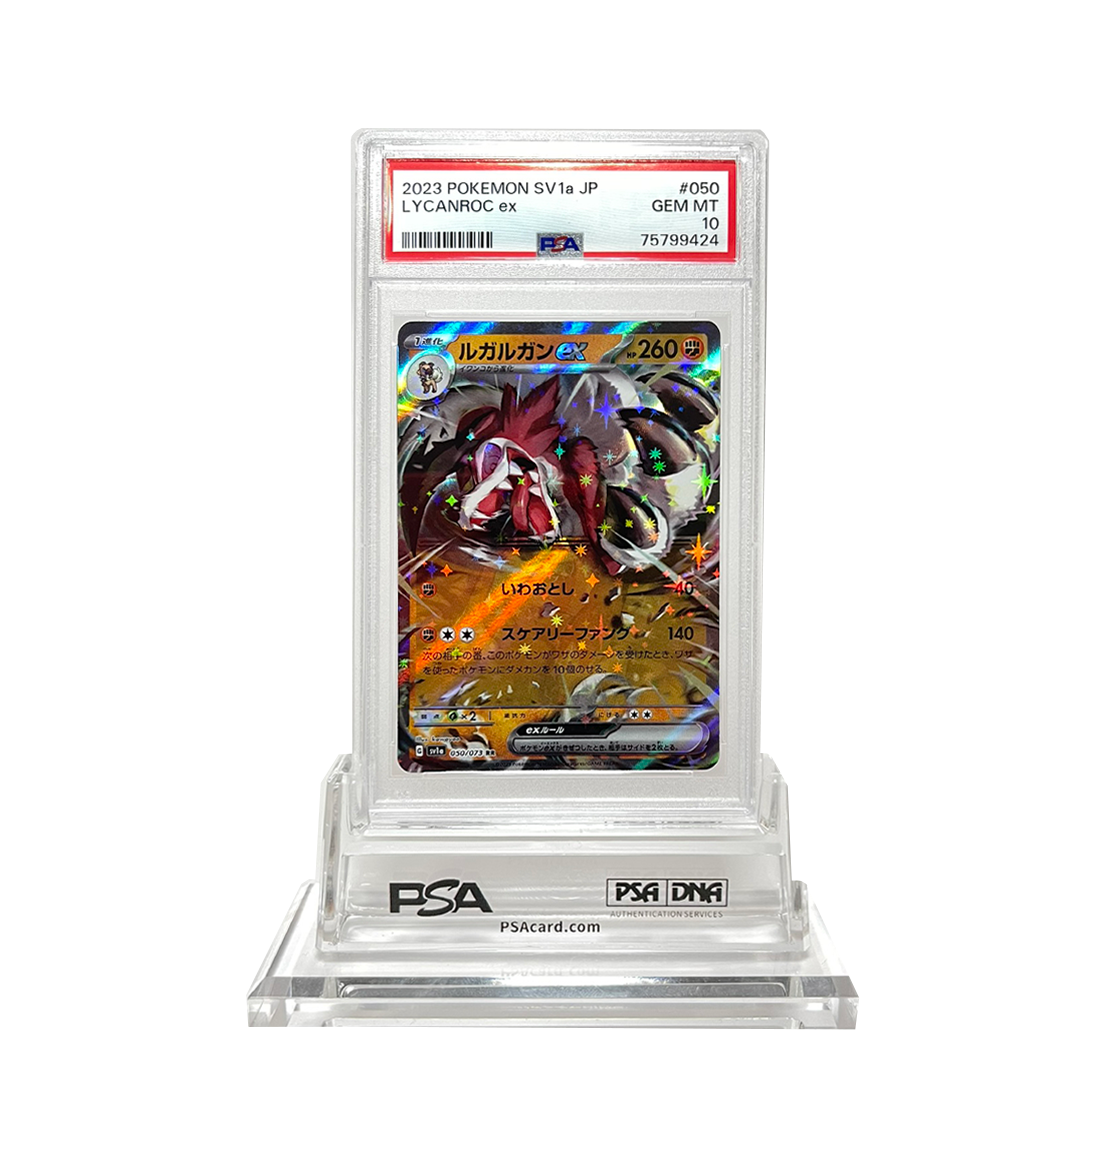 PSA 10 Lycanroc ex #050 Triplet Beat SV1a Japanese Pokemon card